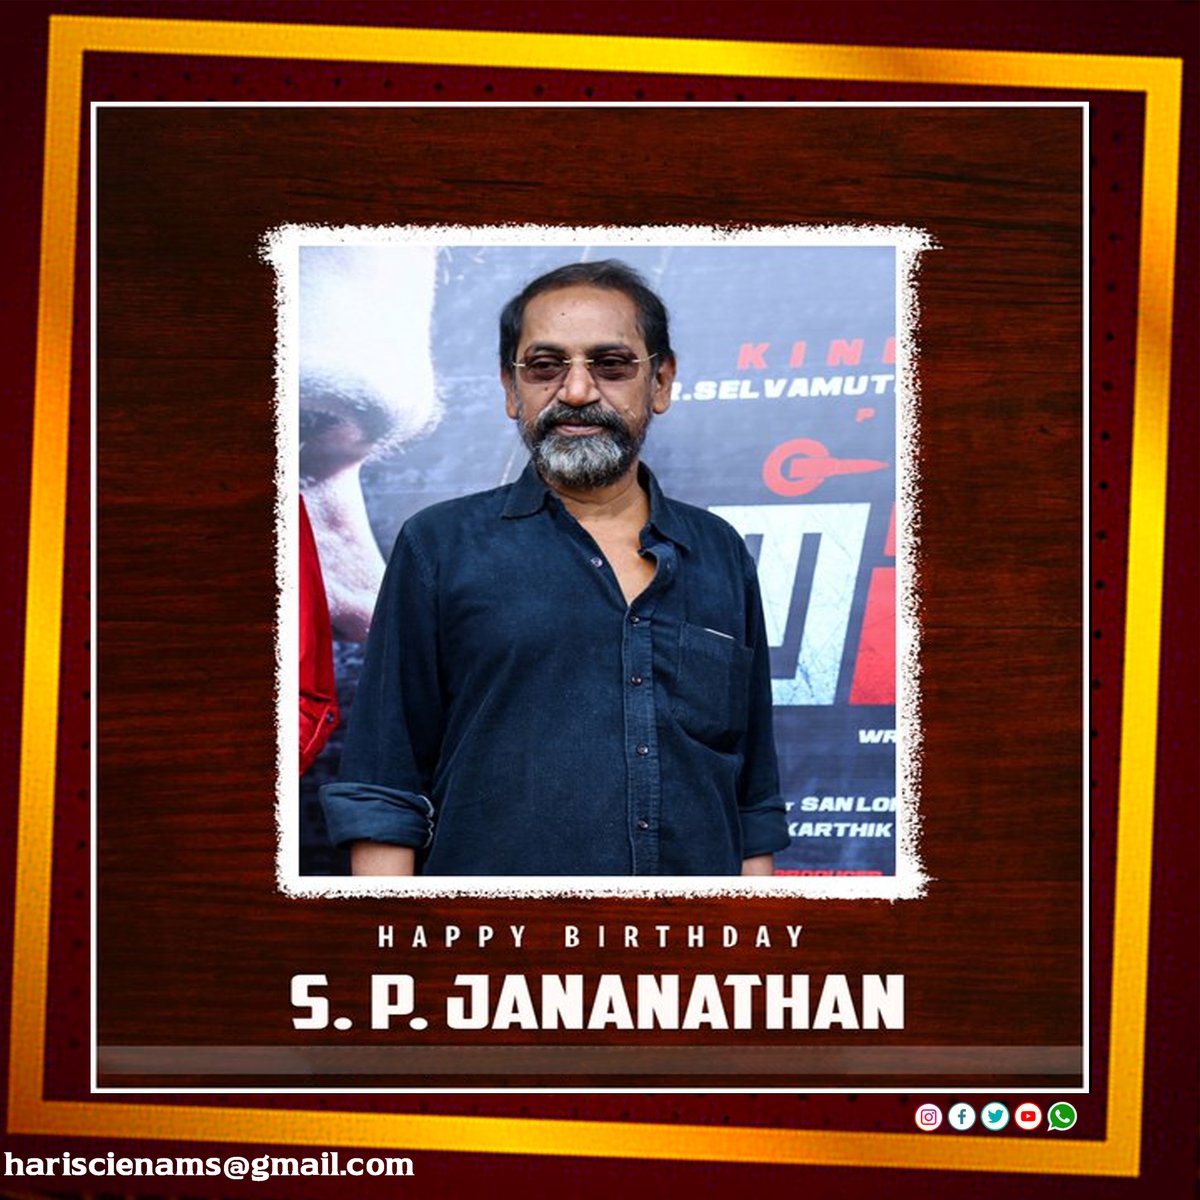 Happy Birthday Director S p Jananathan  
#HbdSpJananathan #SpJananathan #hariscinemas